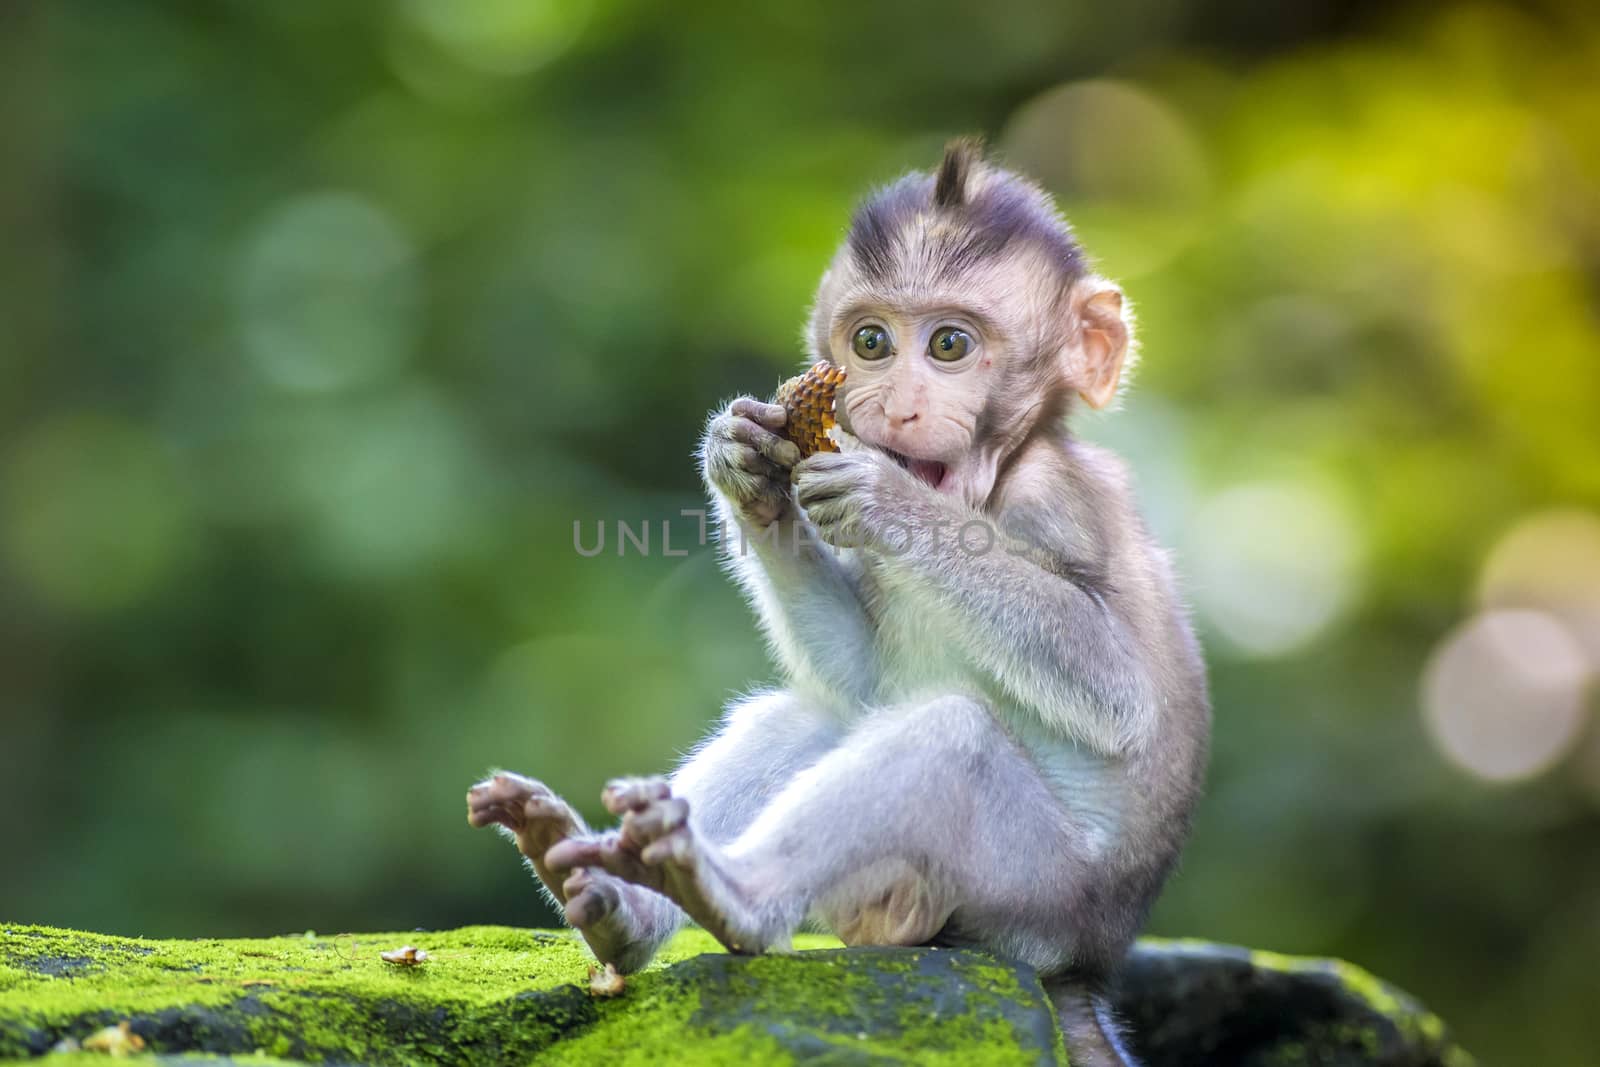 Little baby-monkey by truphoto